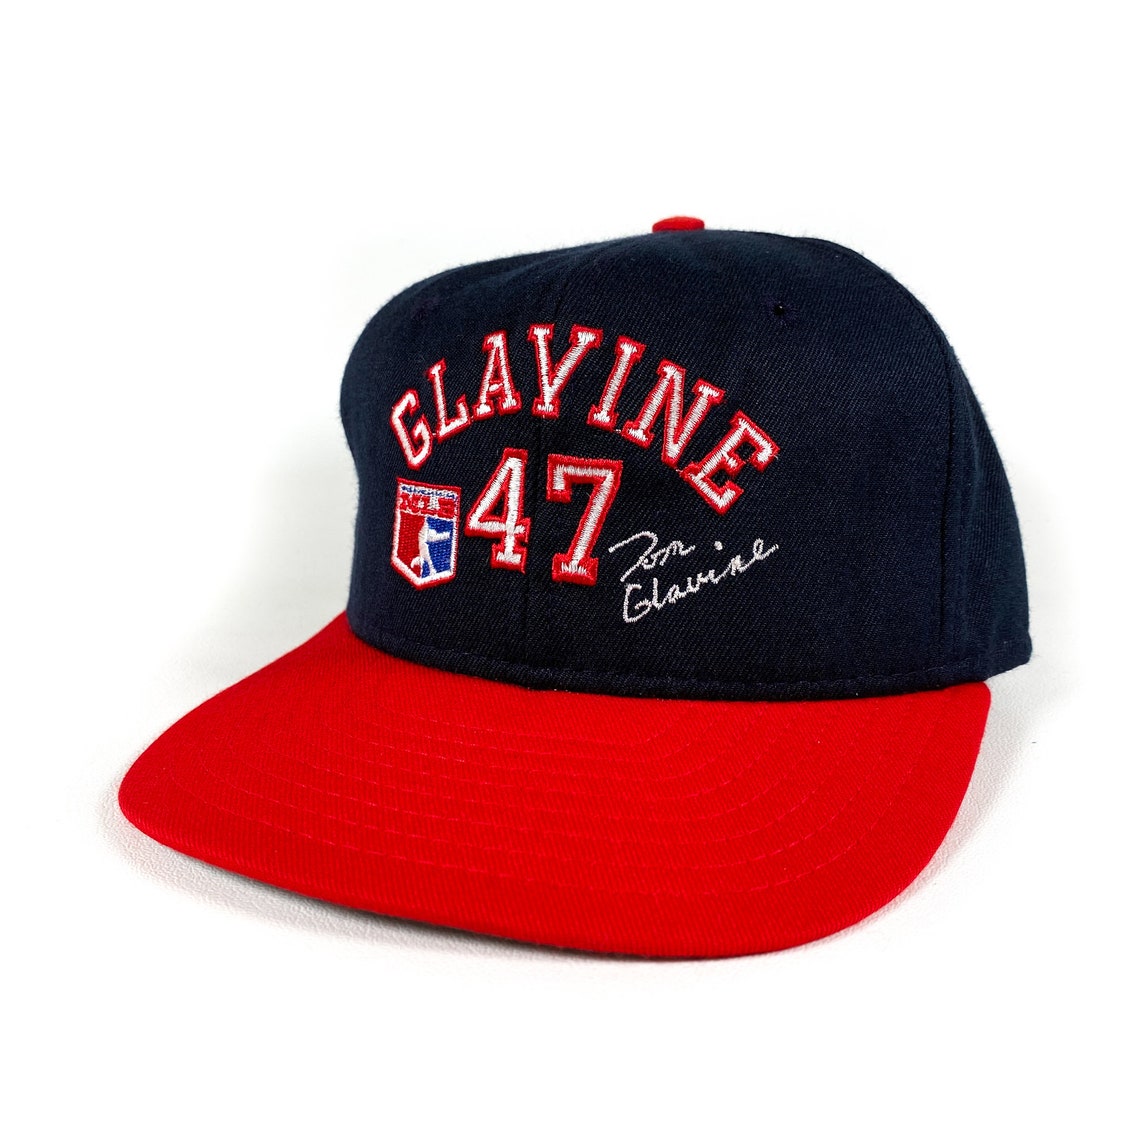 Vintage Atlanta Braves Glavine Hat 90s atlanta braves hat | Etsy